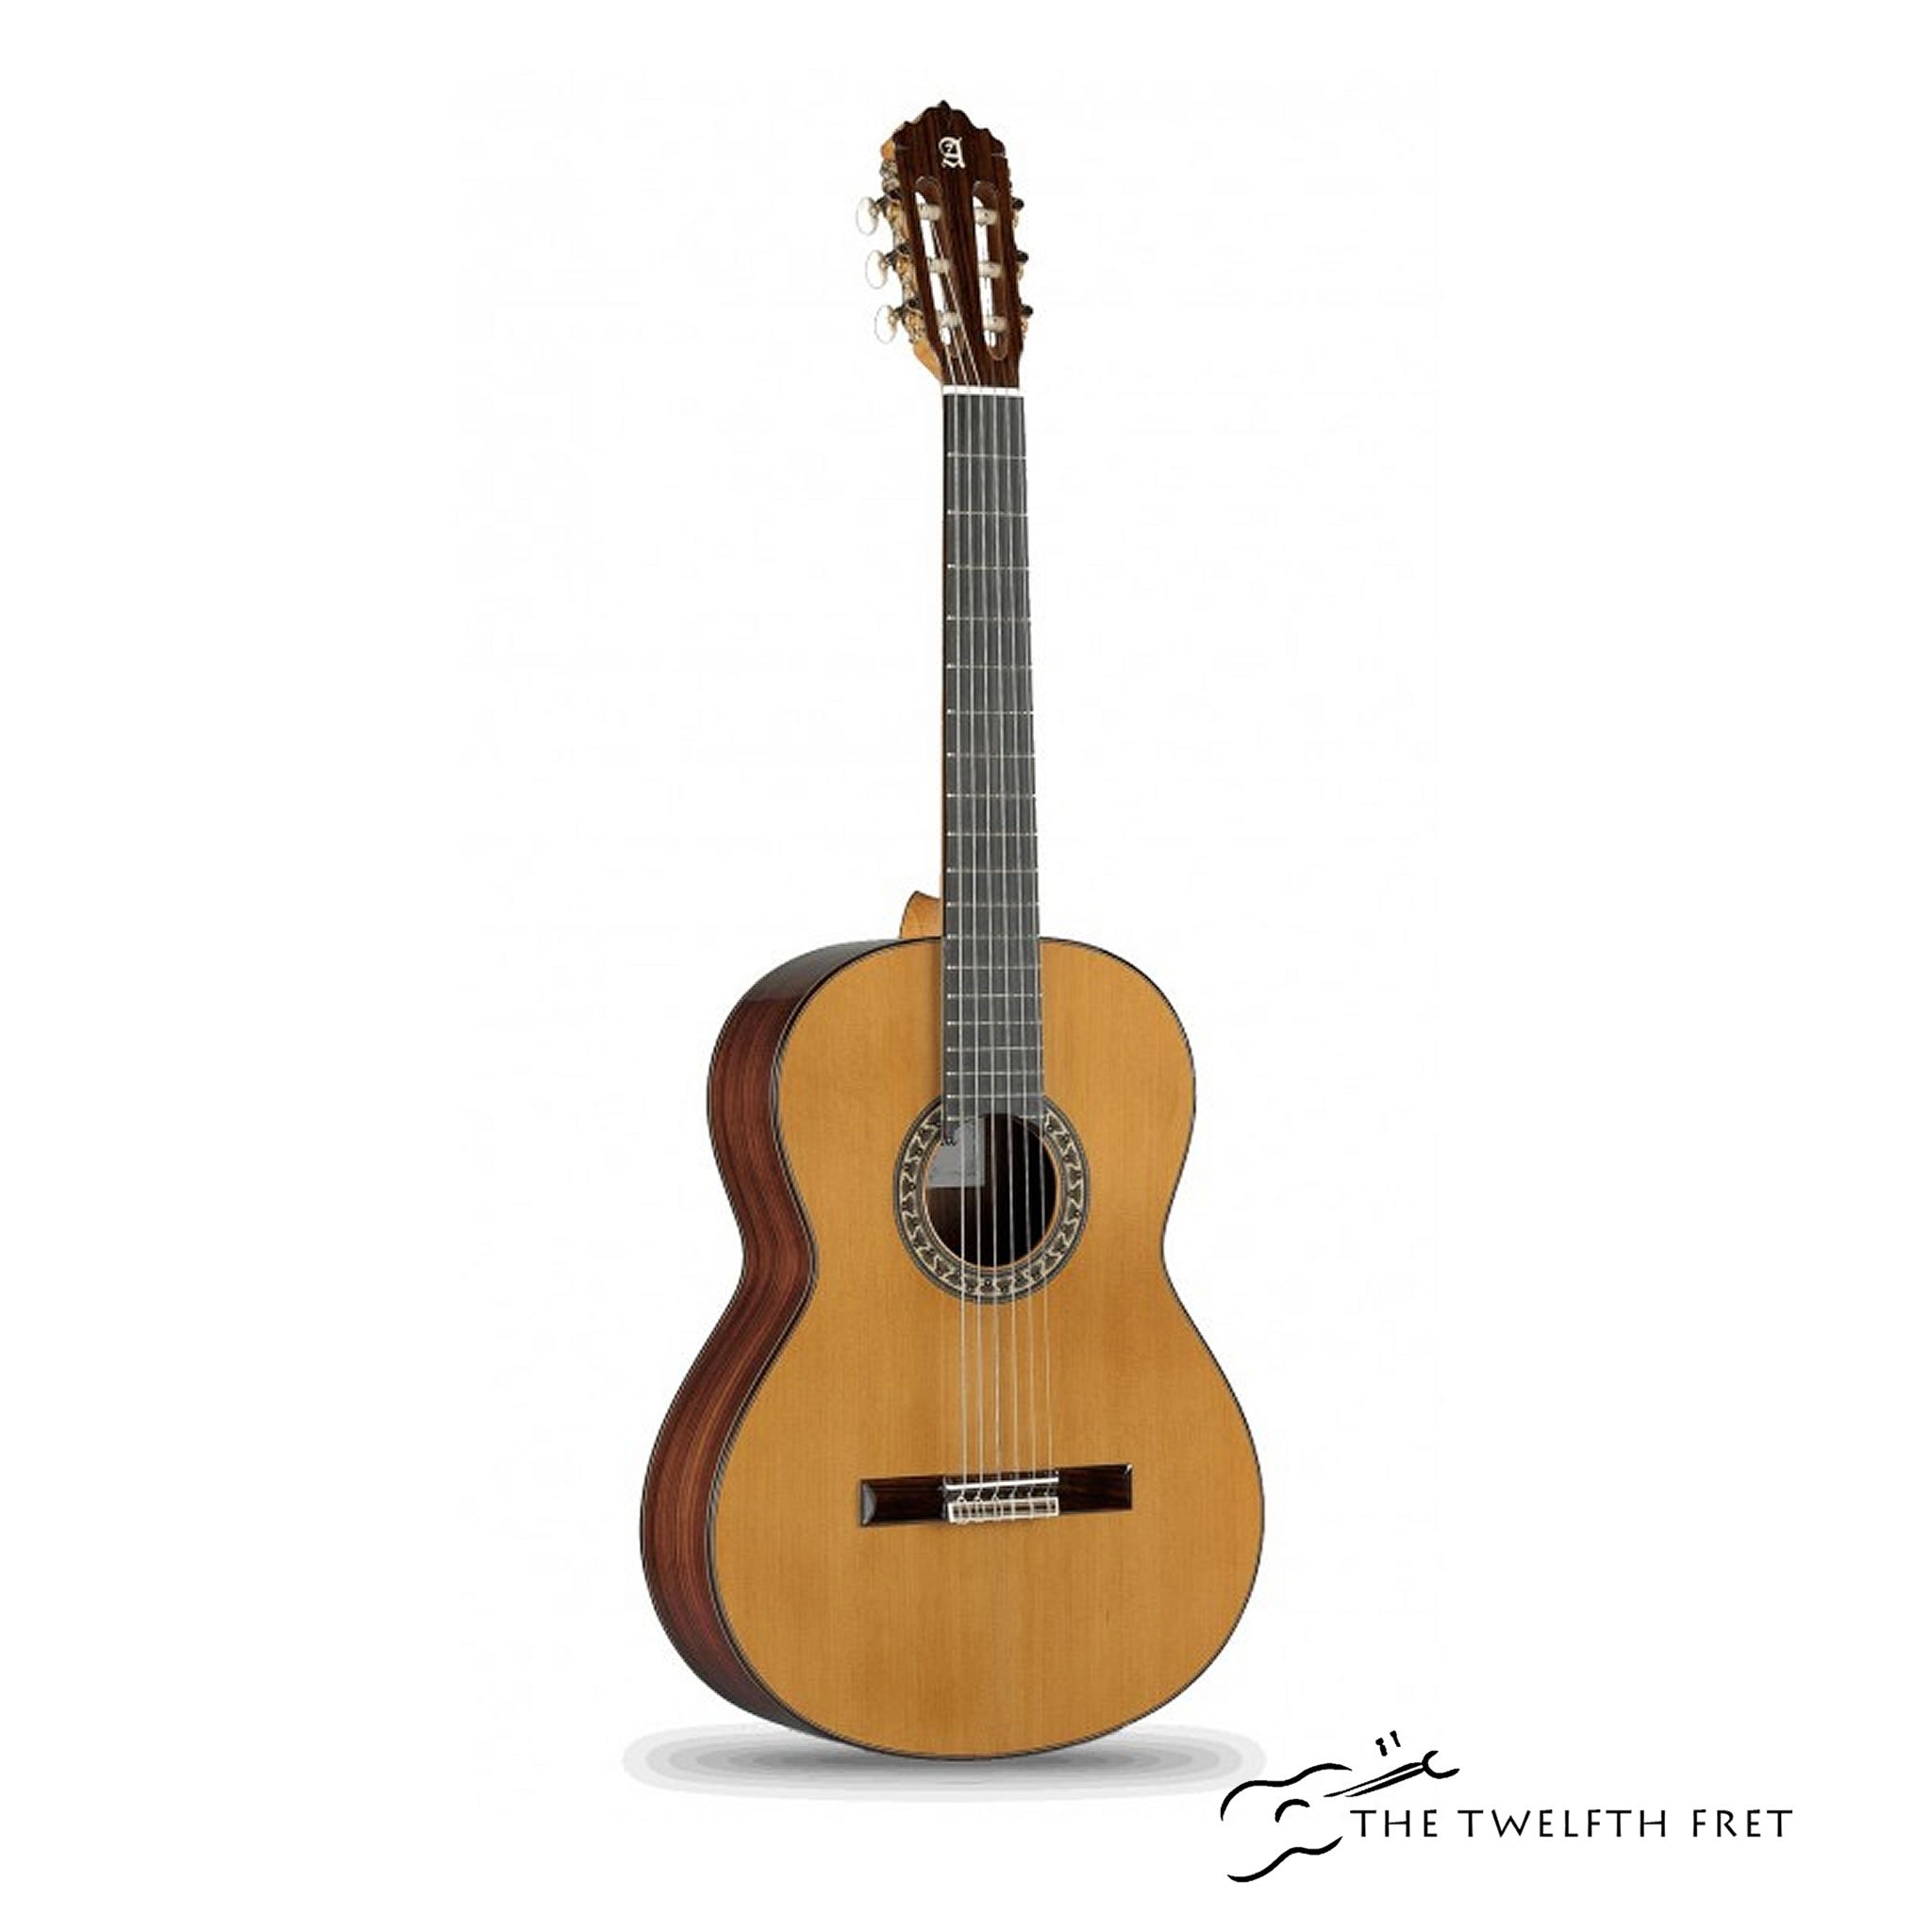 Alhambra Señorita 5P Classical Guitar - The Twelfth Fret